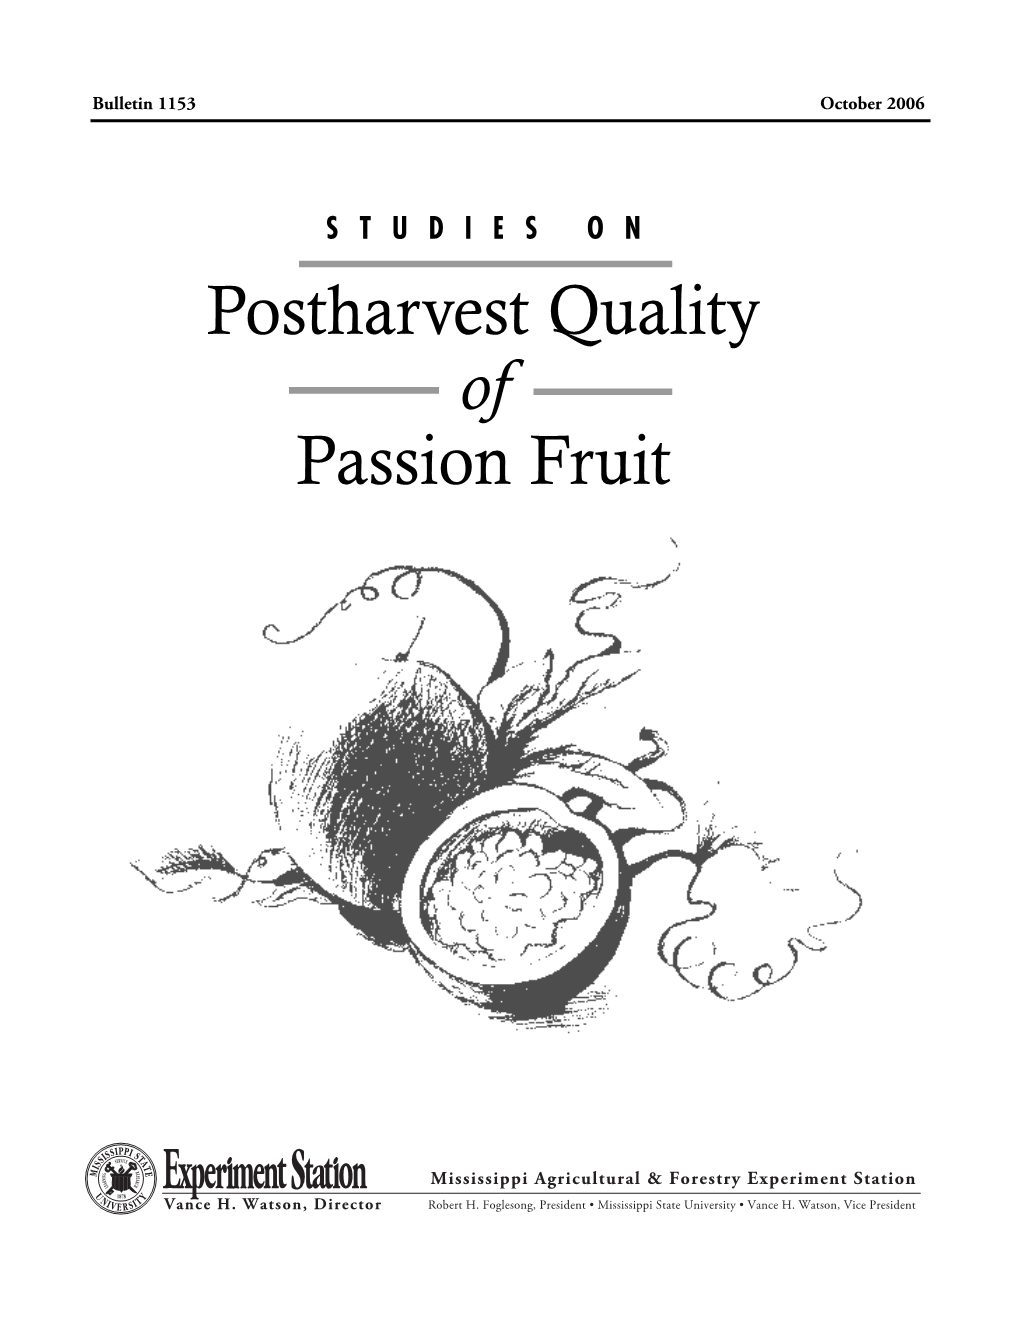 B1153 Studies on Postharvest Quality of Passion Fruit